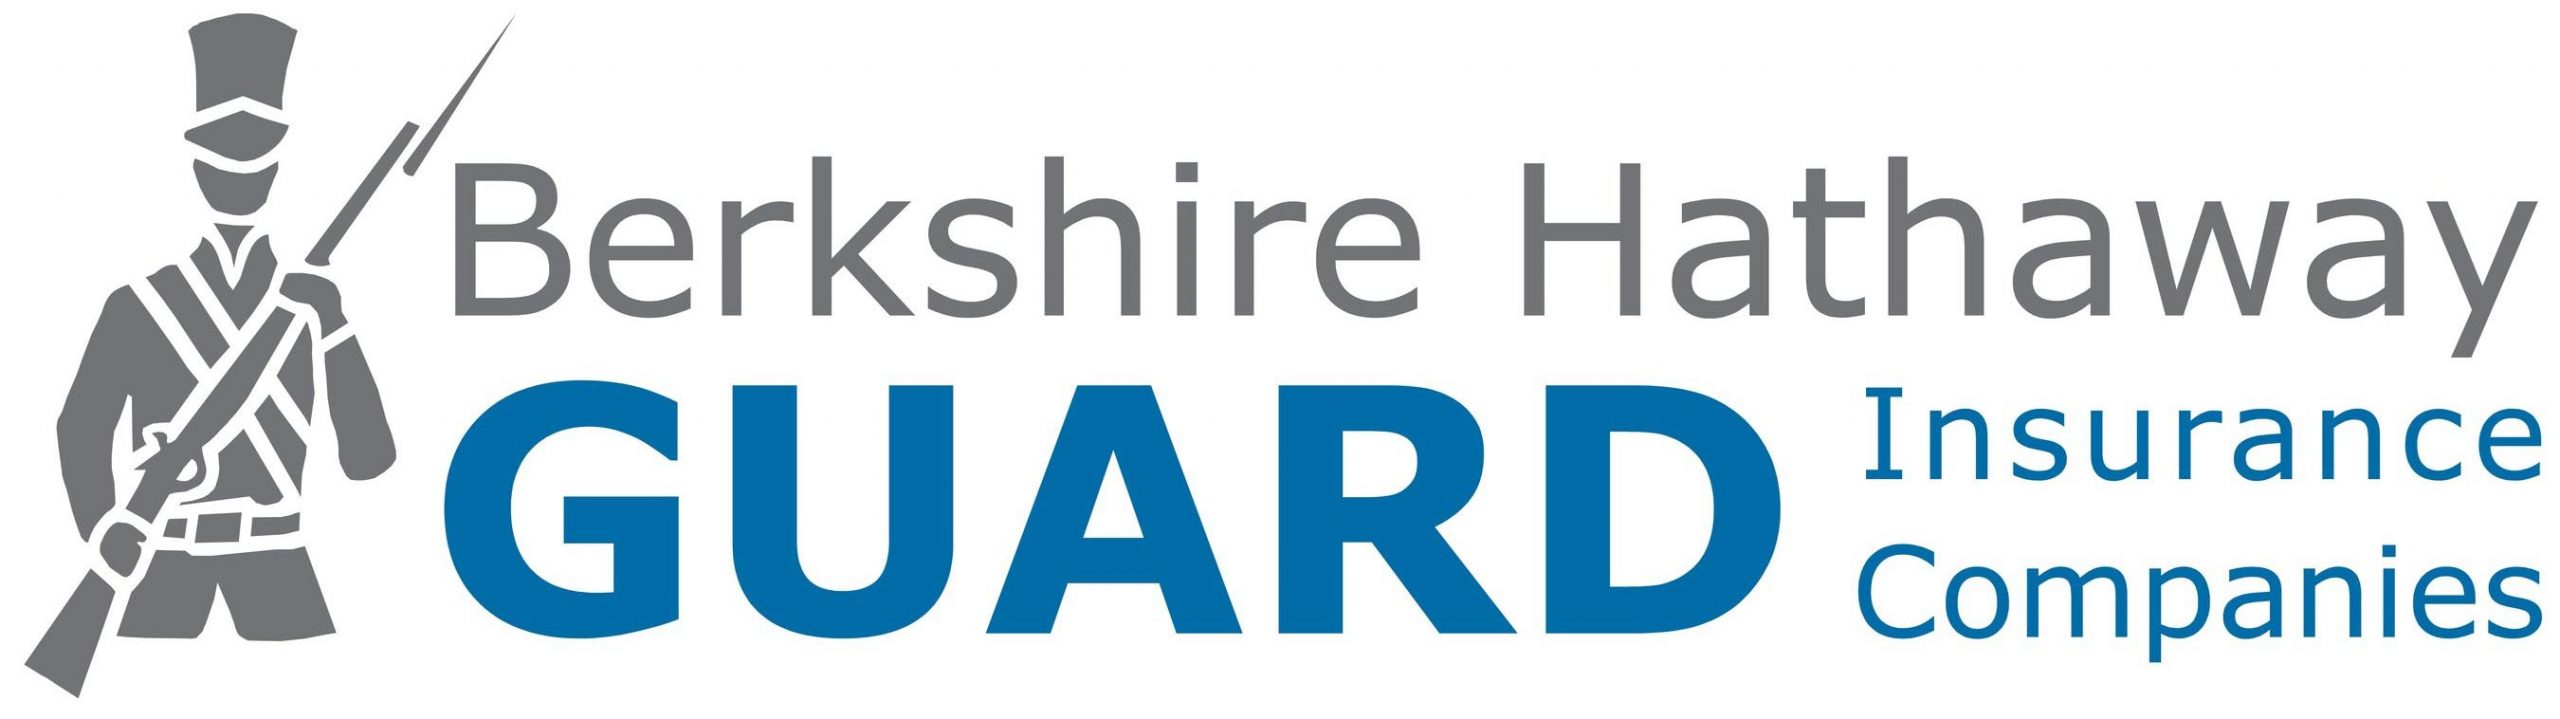 berkshire-hathaway-guard-logo